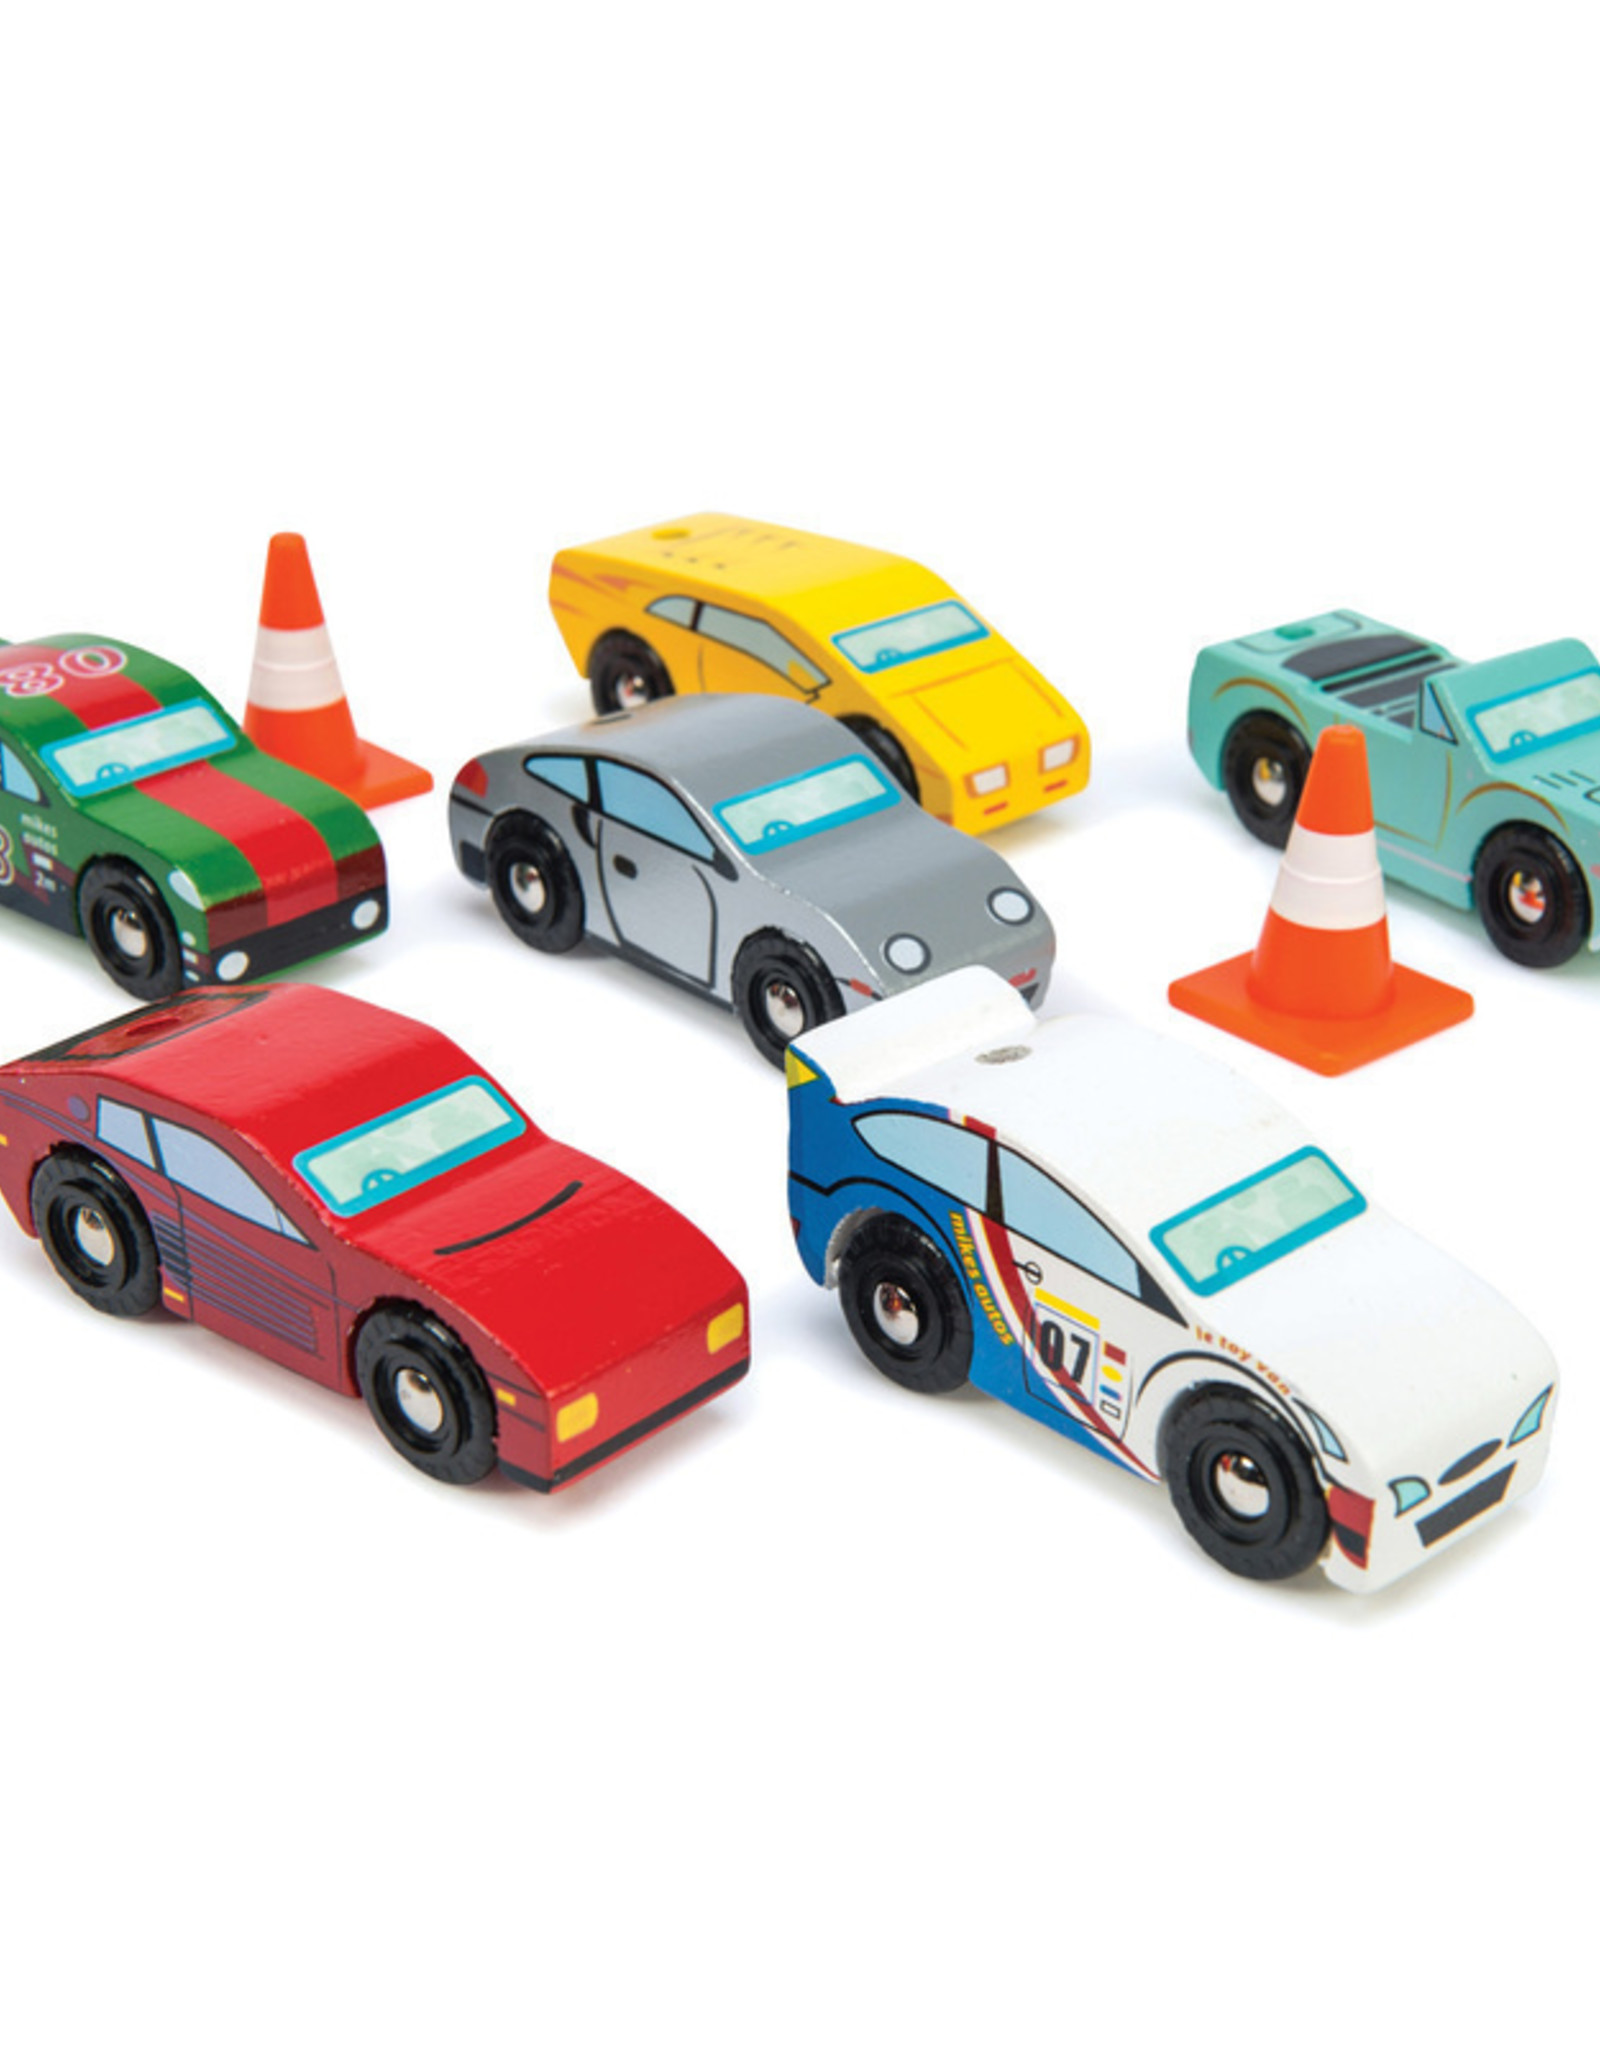 Le Toy Van Le Toy Van - Monte Carlo Sports Car Set